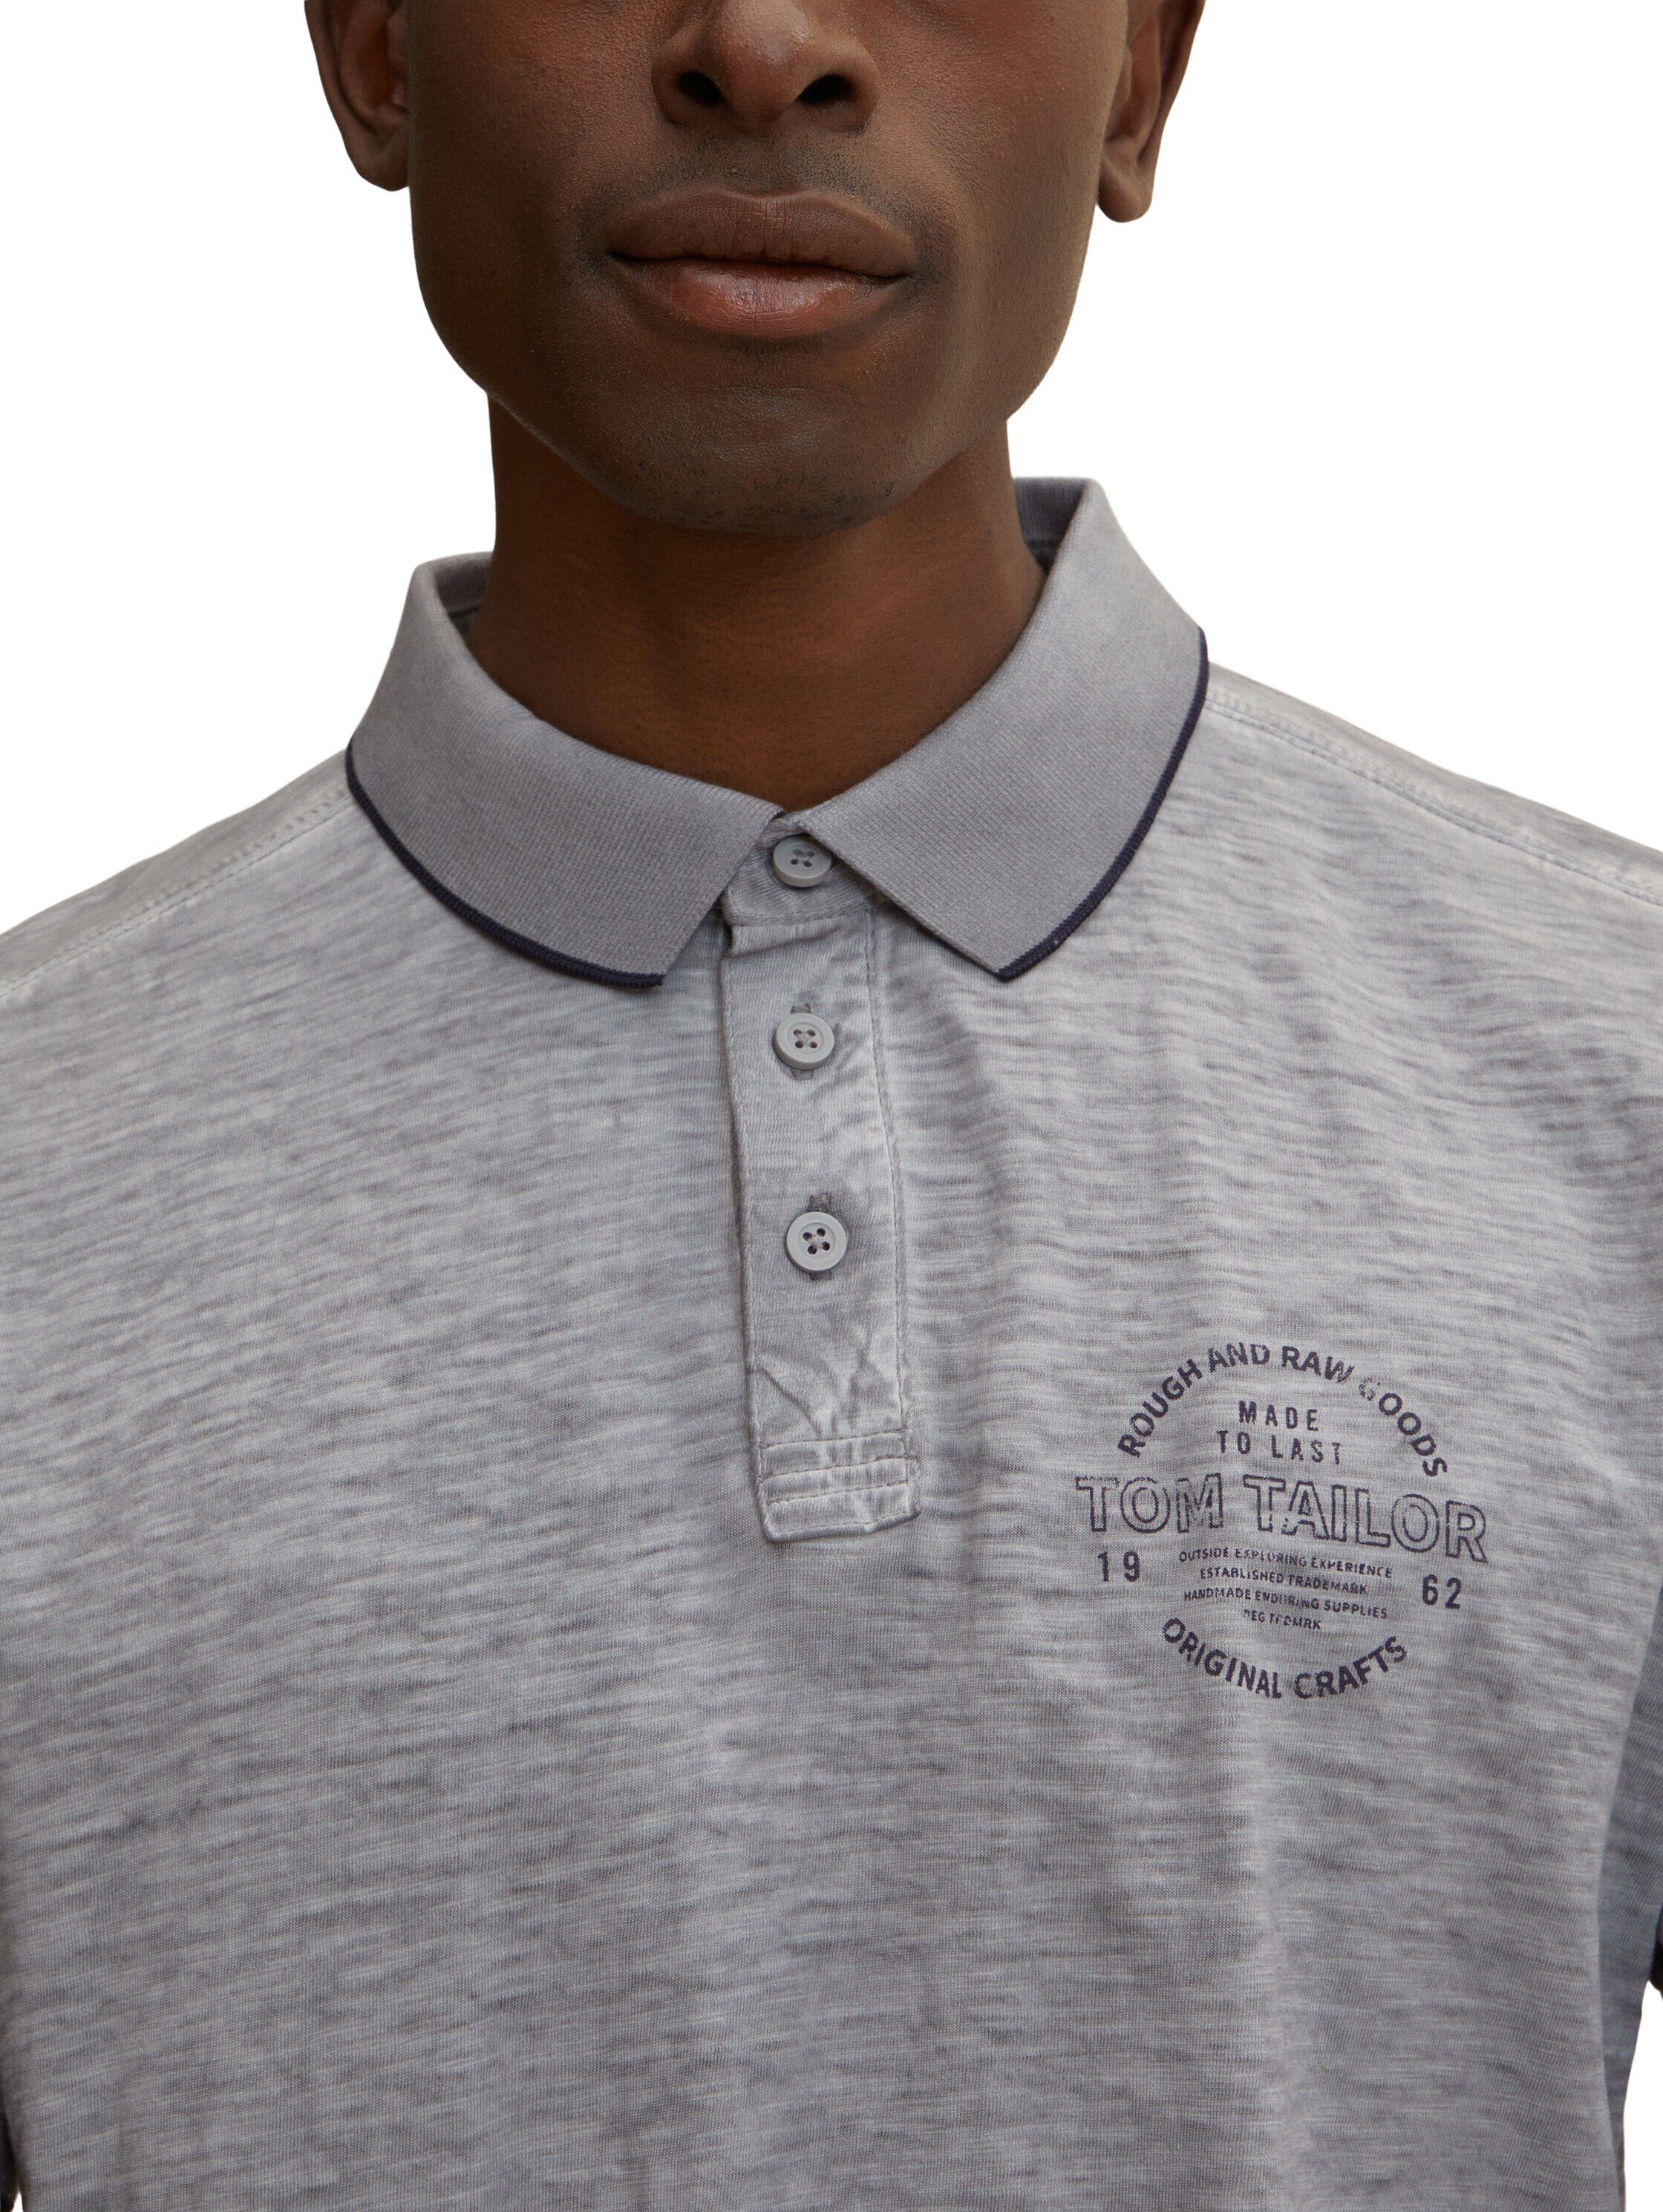 halber Logo TOM grau Poloshirt mit Print TAILOR Poloshirt und Shirt